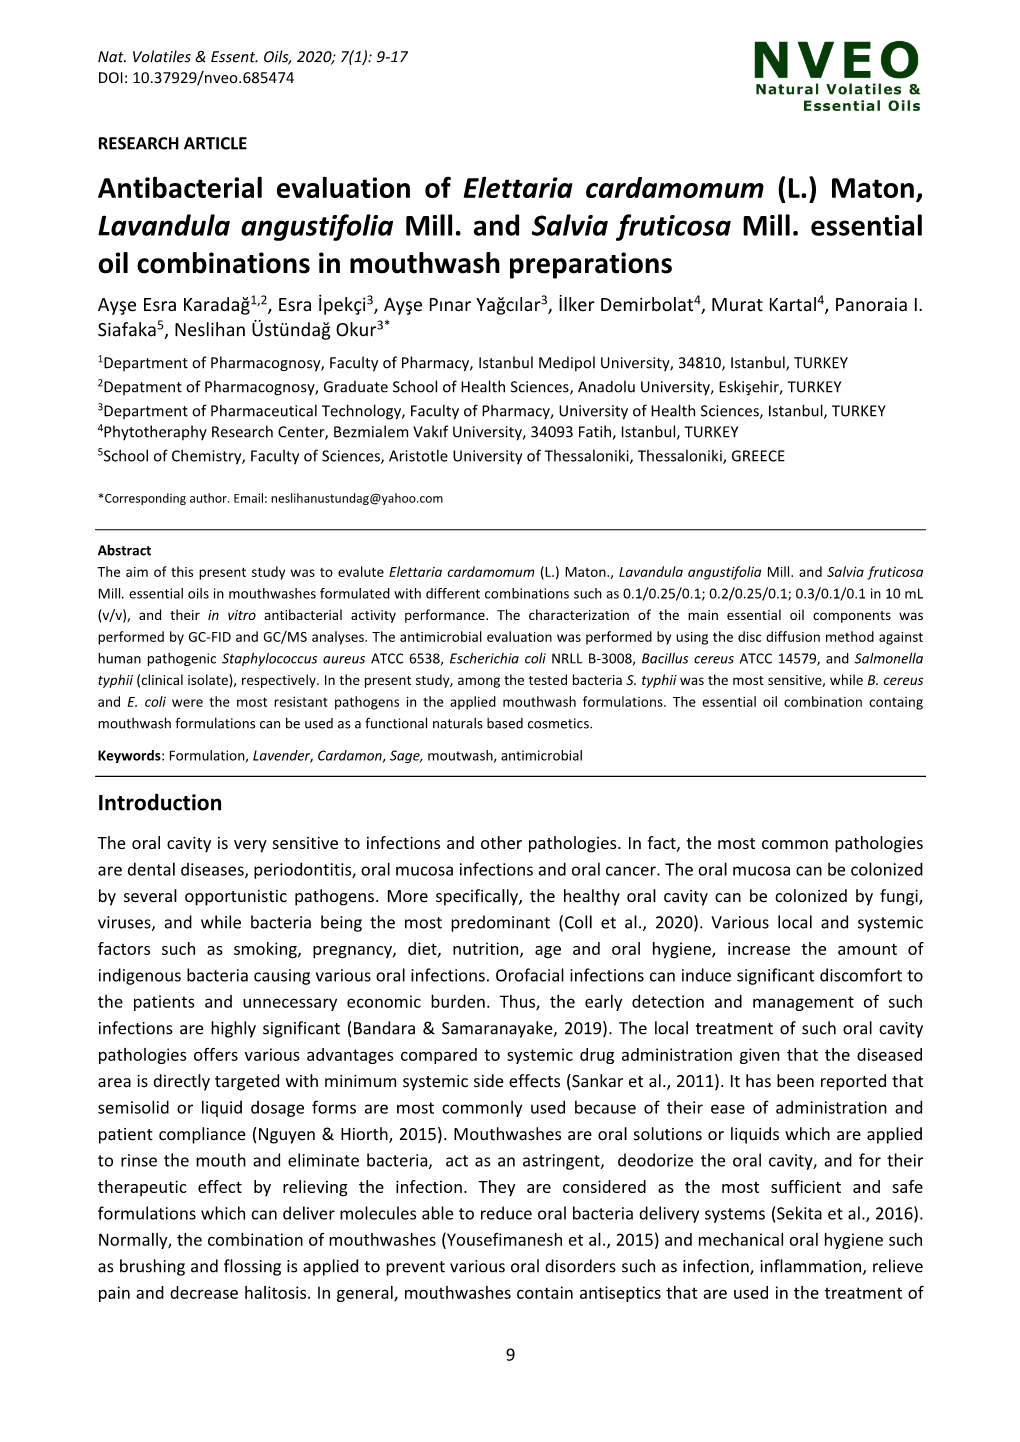 Antibacterial Evaluation of Elettaria Cardamomum (L.) Maton, Lavandula Angustifolia Mill